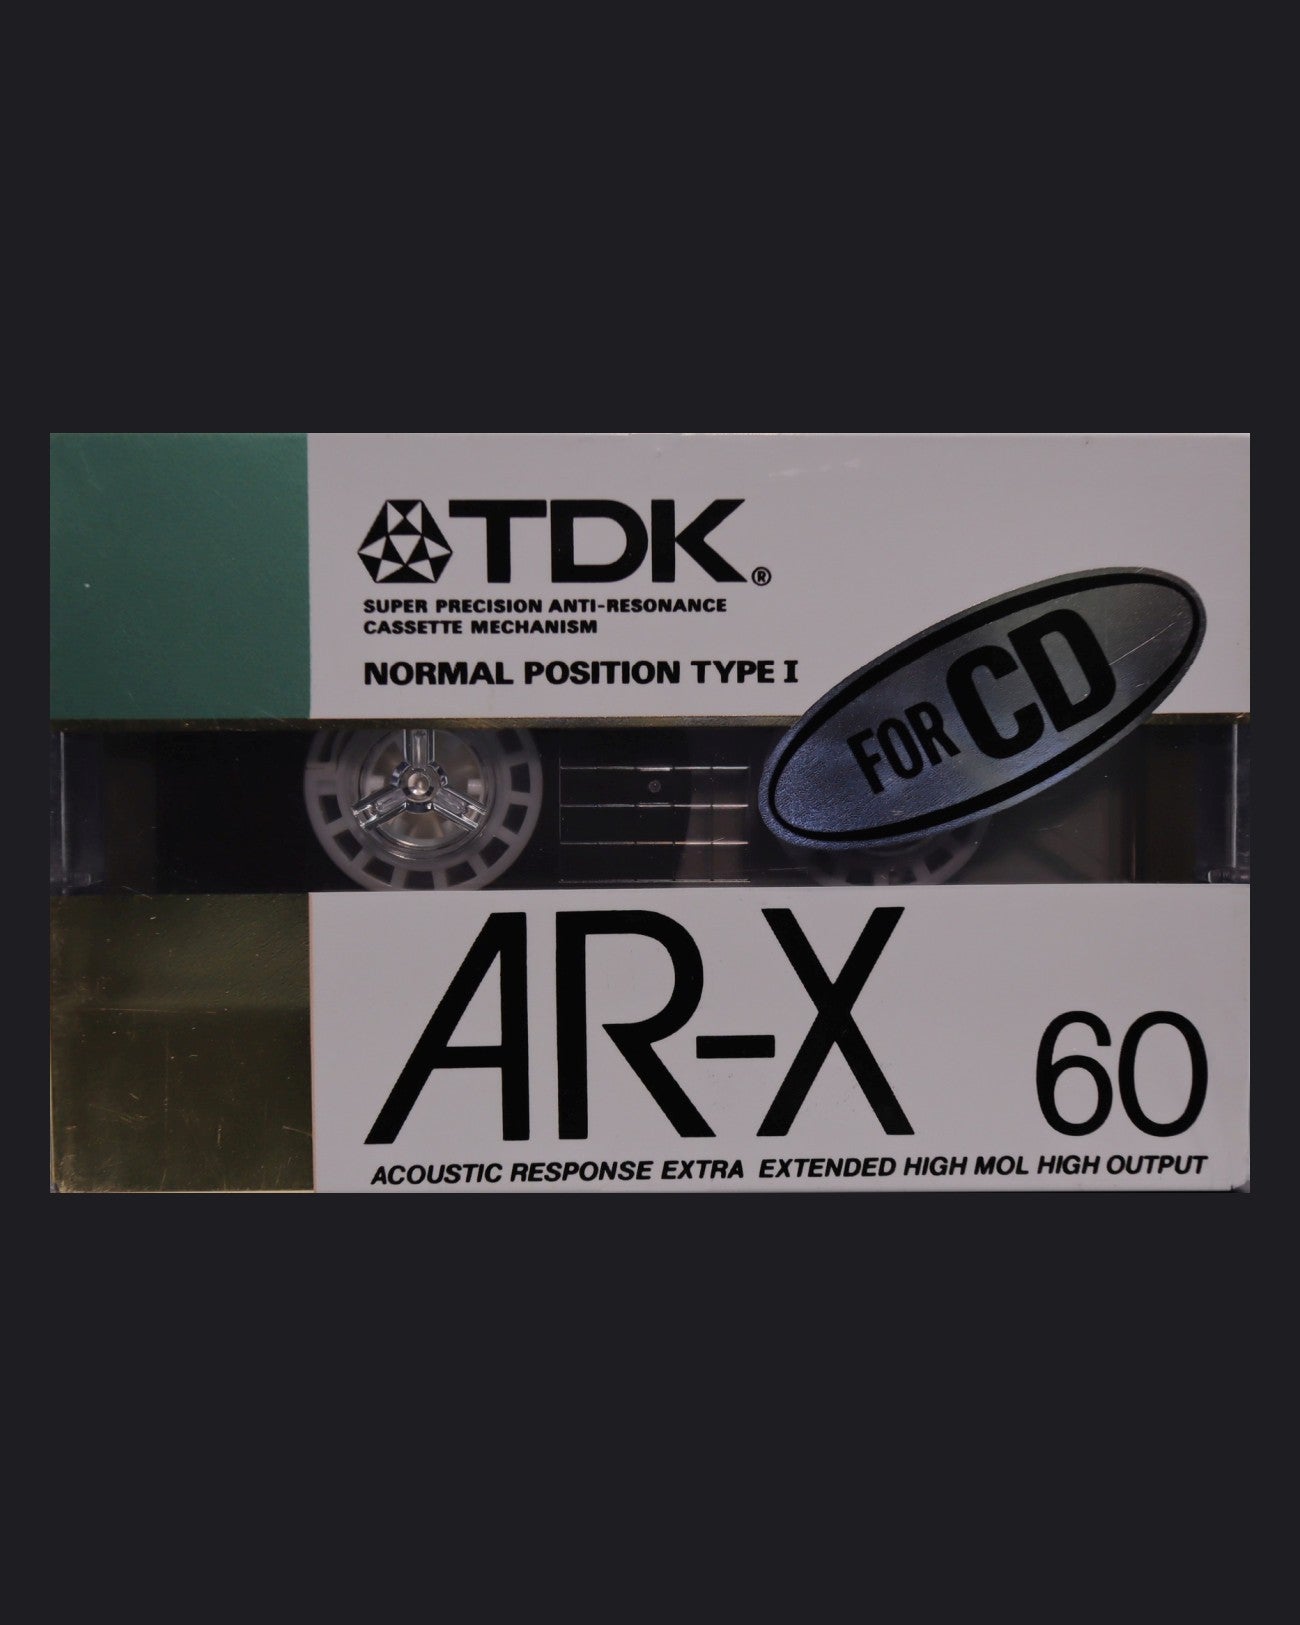 TDK AR-X (1987-1989 JP) Ultra Ferric